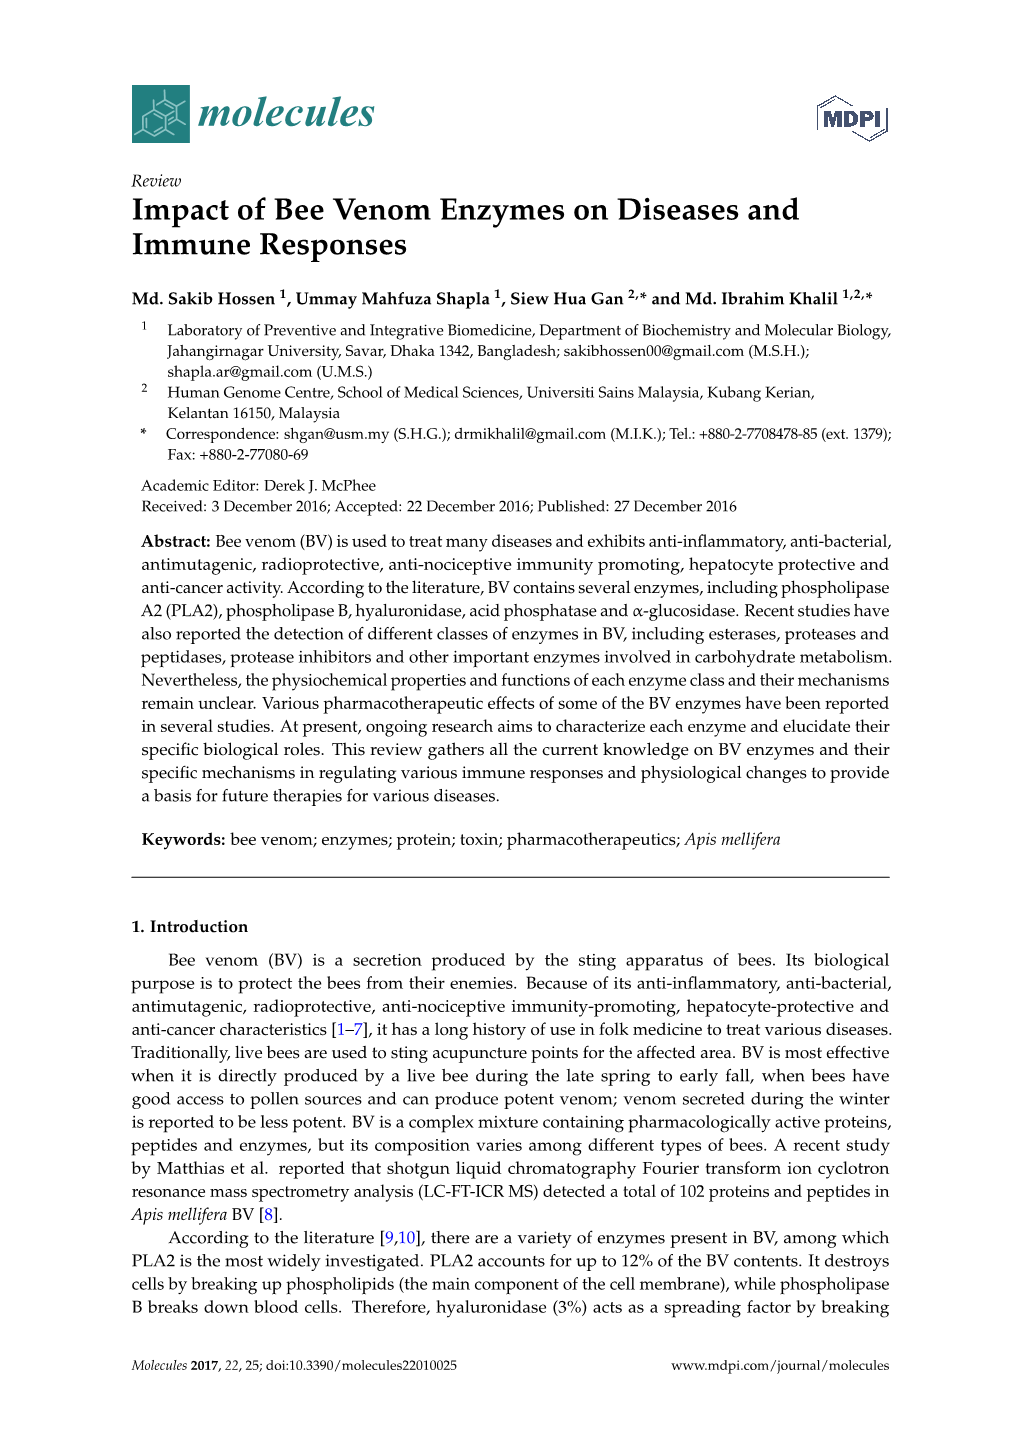 Impact of Bee Venom Enzymes on Diseases and Immune Responses